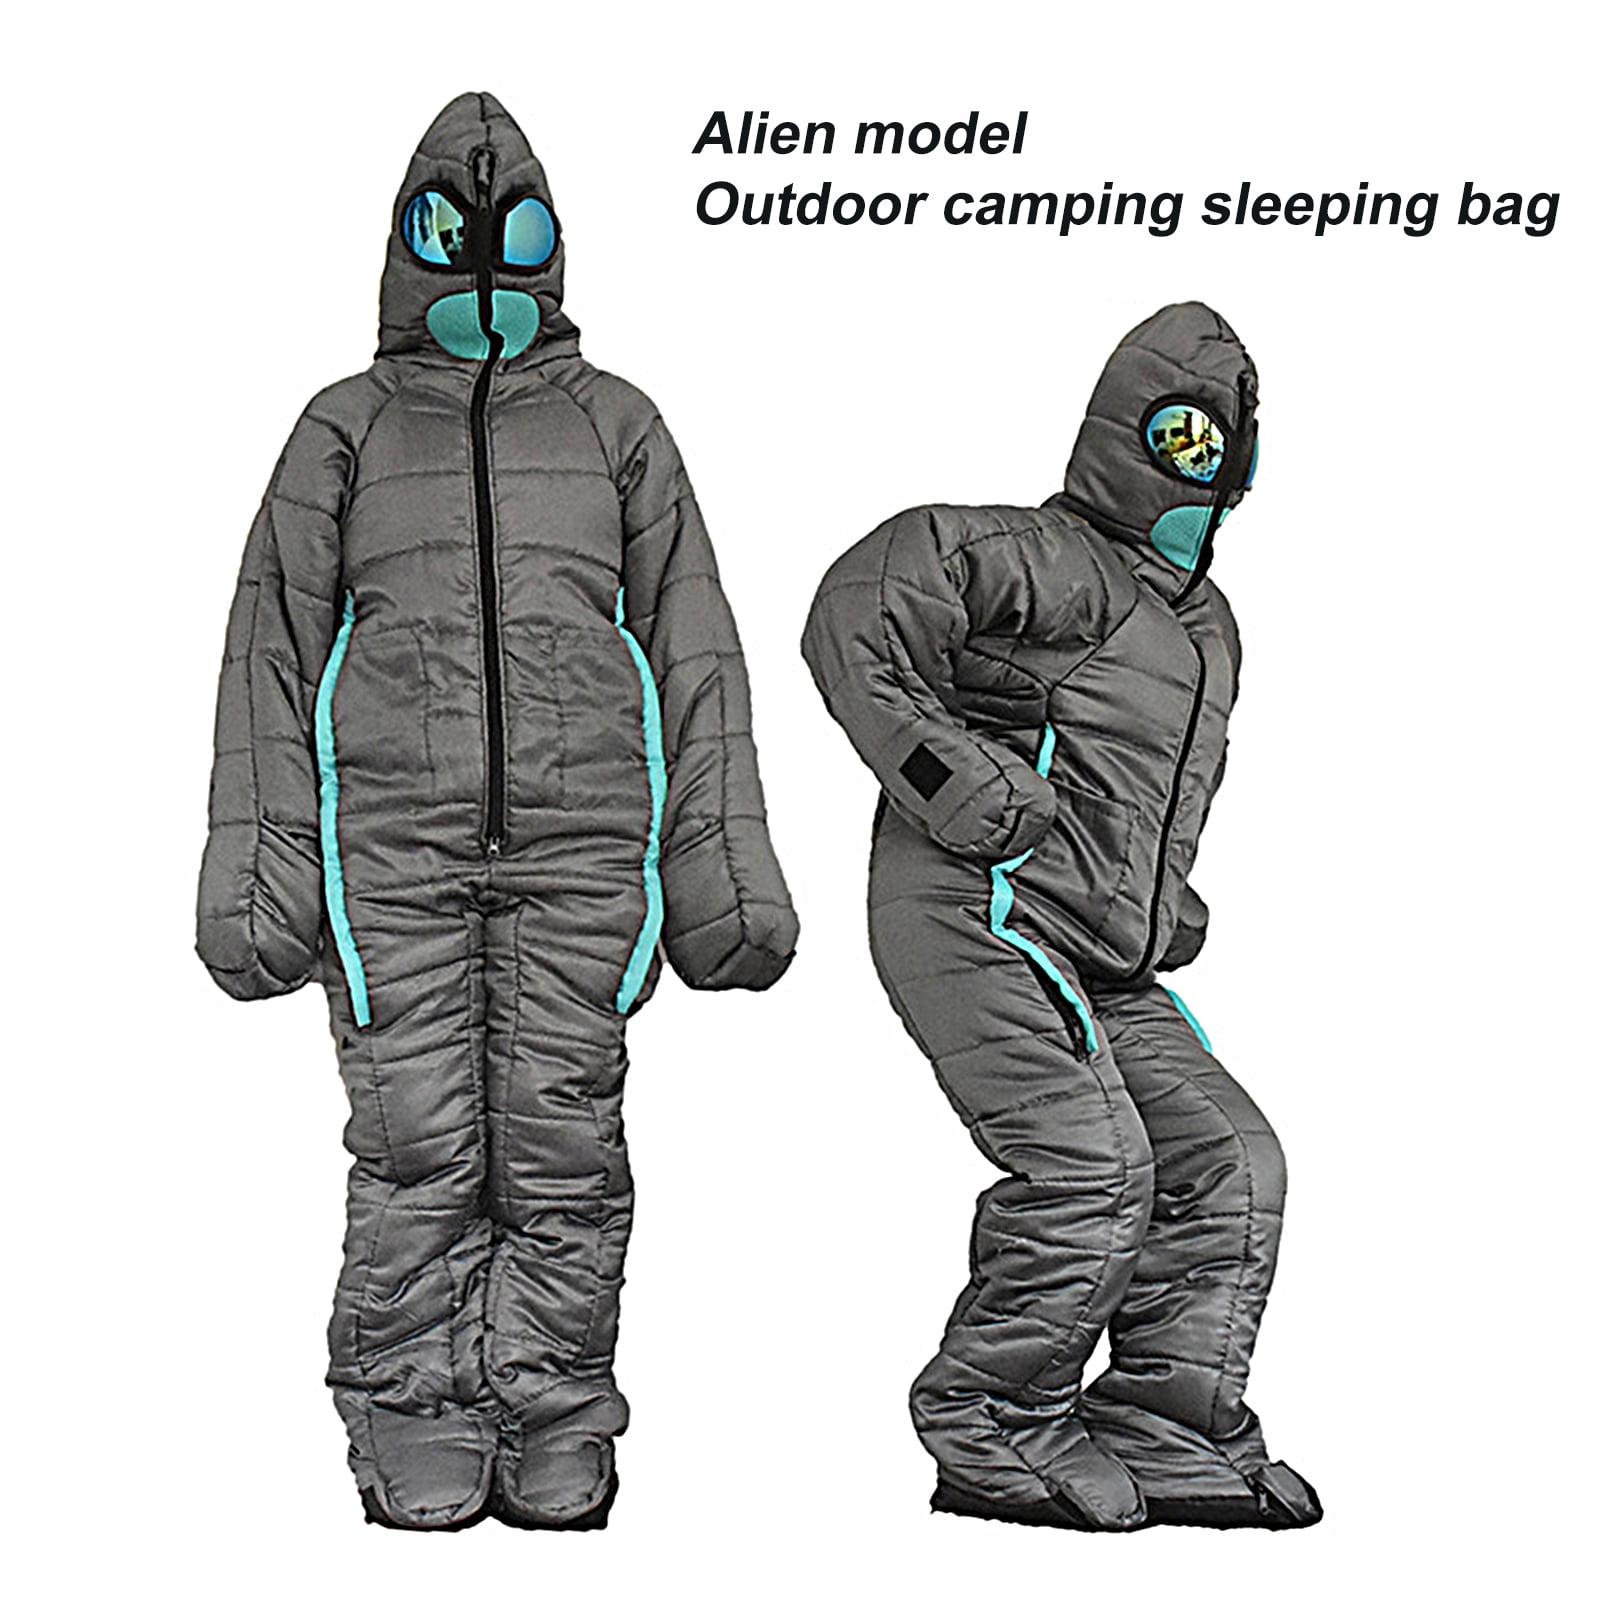 Wearable Sleeping Bag Suit Creative Alien Sleeping Bag for Adult